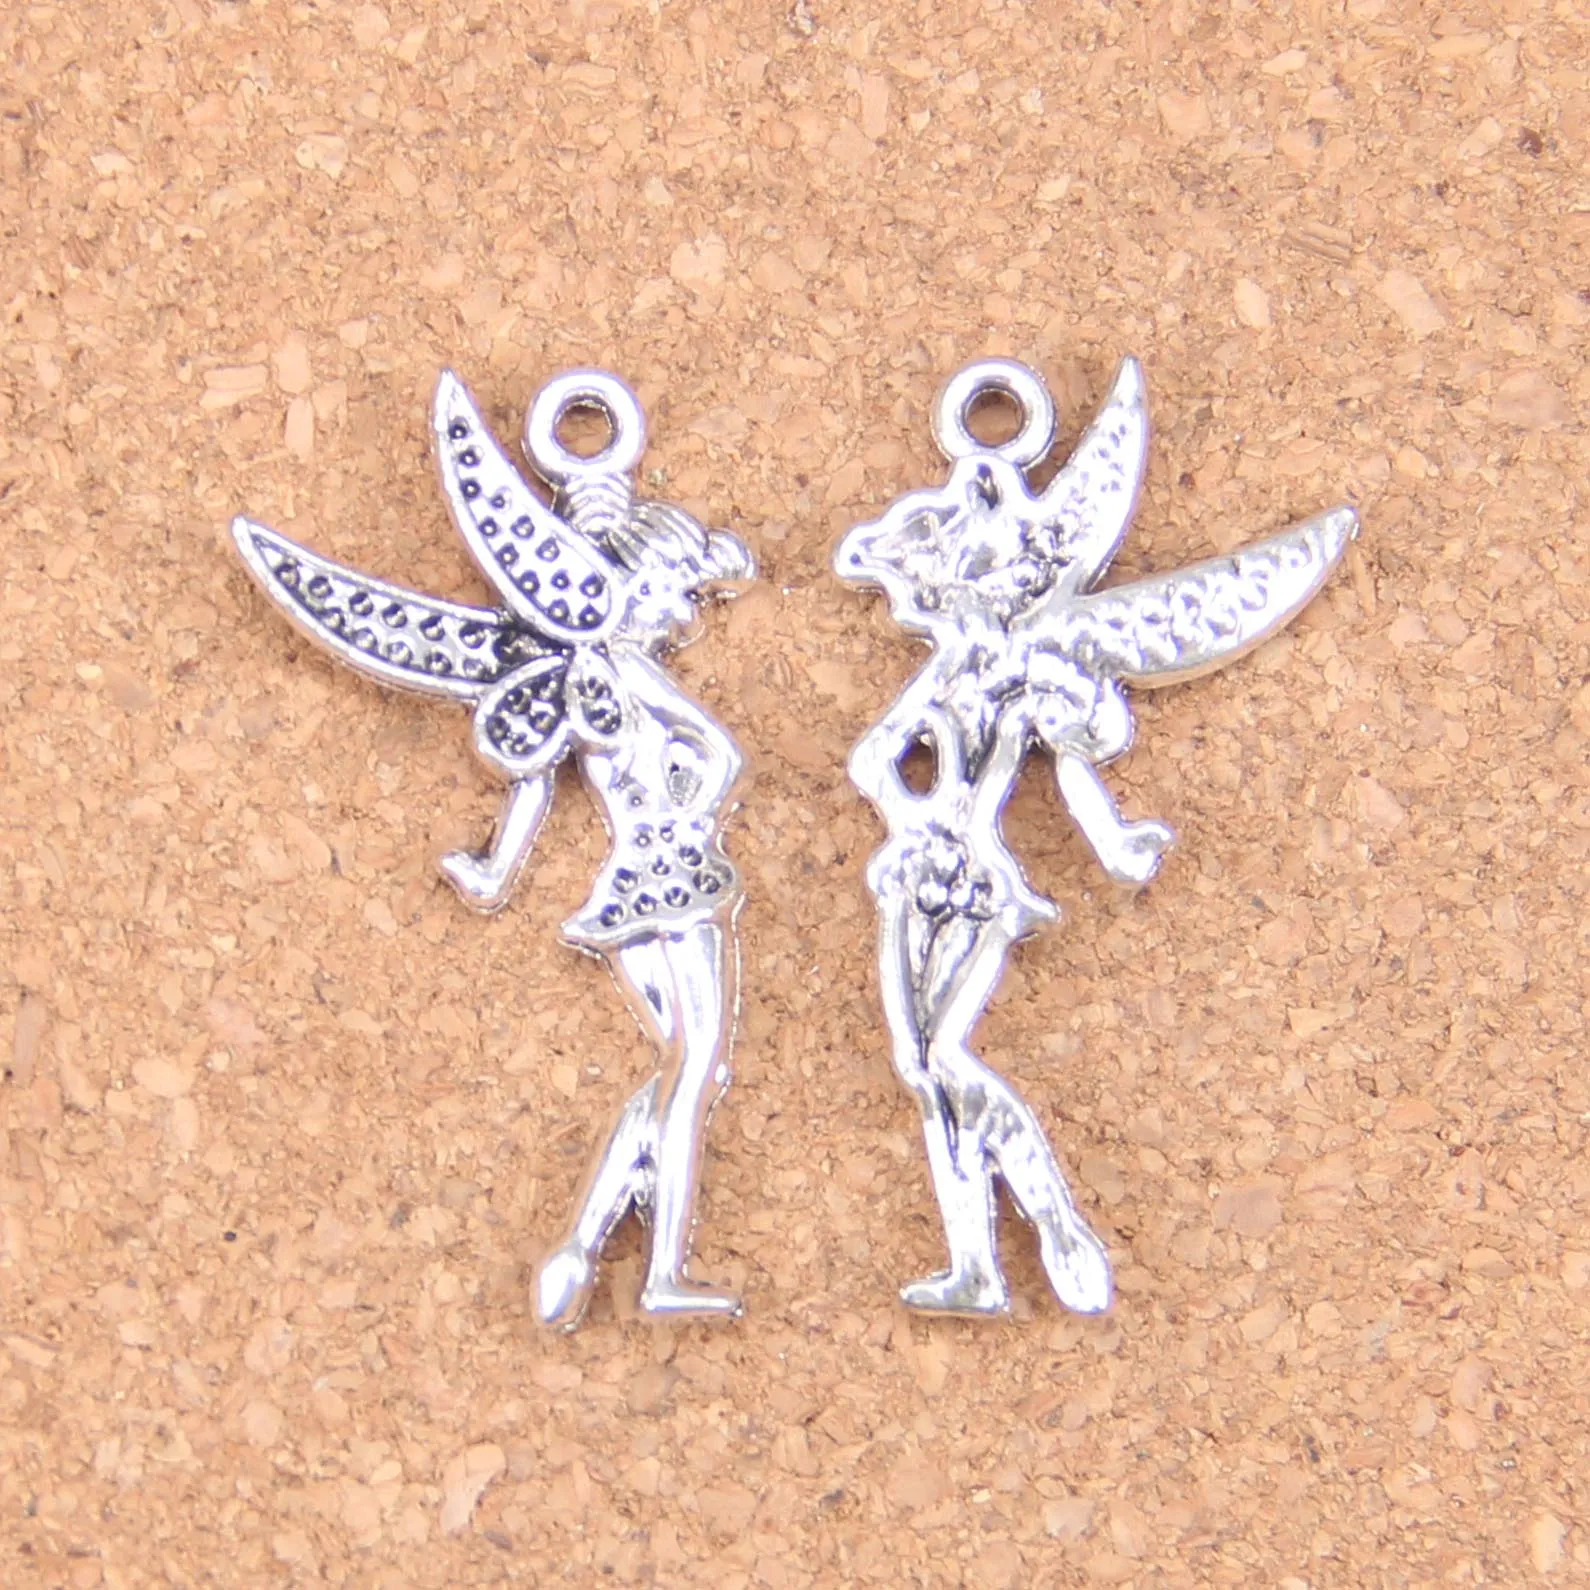 50 stks antiek zilver brons vergulde engel meisje charms hanger diy ketting armband Bangle bevindingen 33 * 14mm